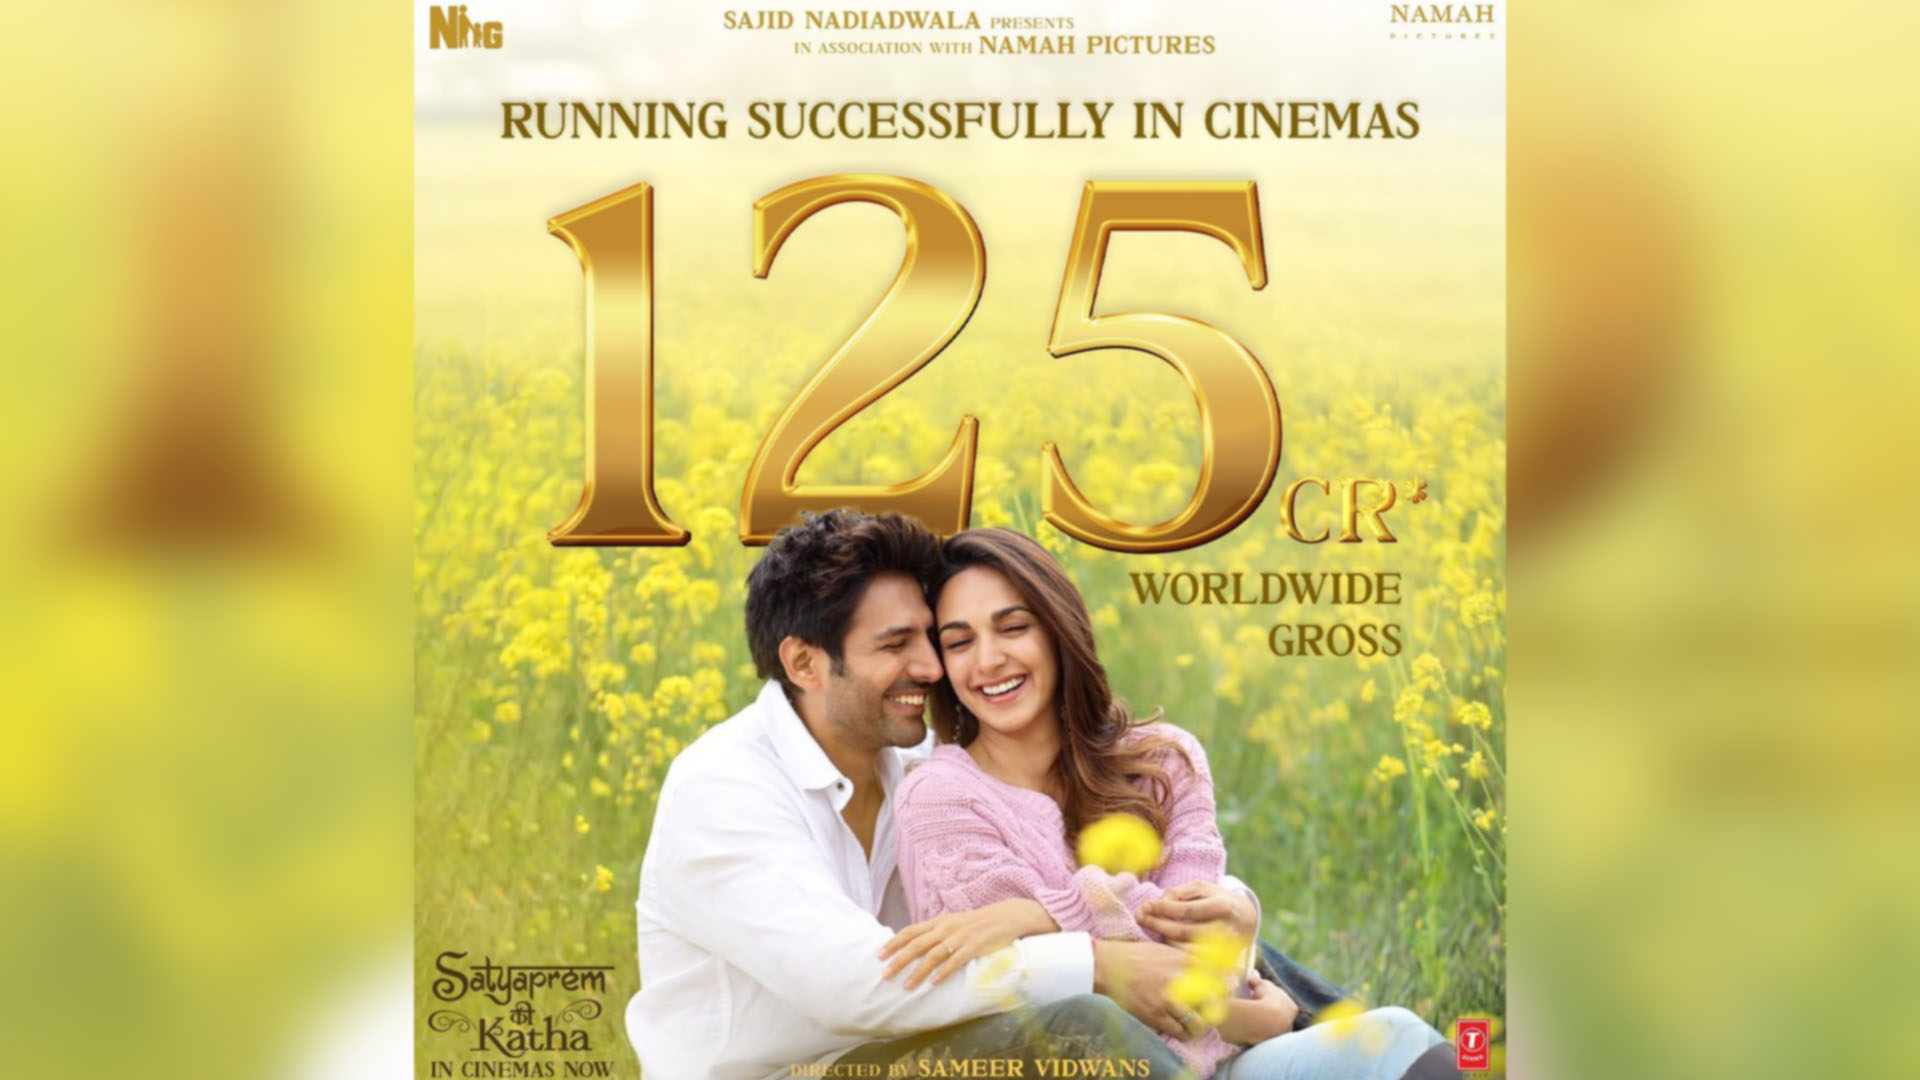 Kartik Aaryan and Kiara Advani starrer ‘Satyaprem Ki Katha’ taken over all the hearts! The film collects 125 Cr. Gross worldwide!